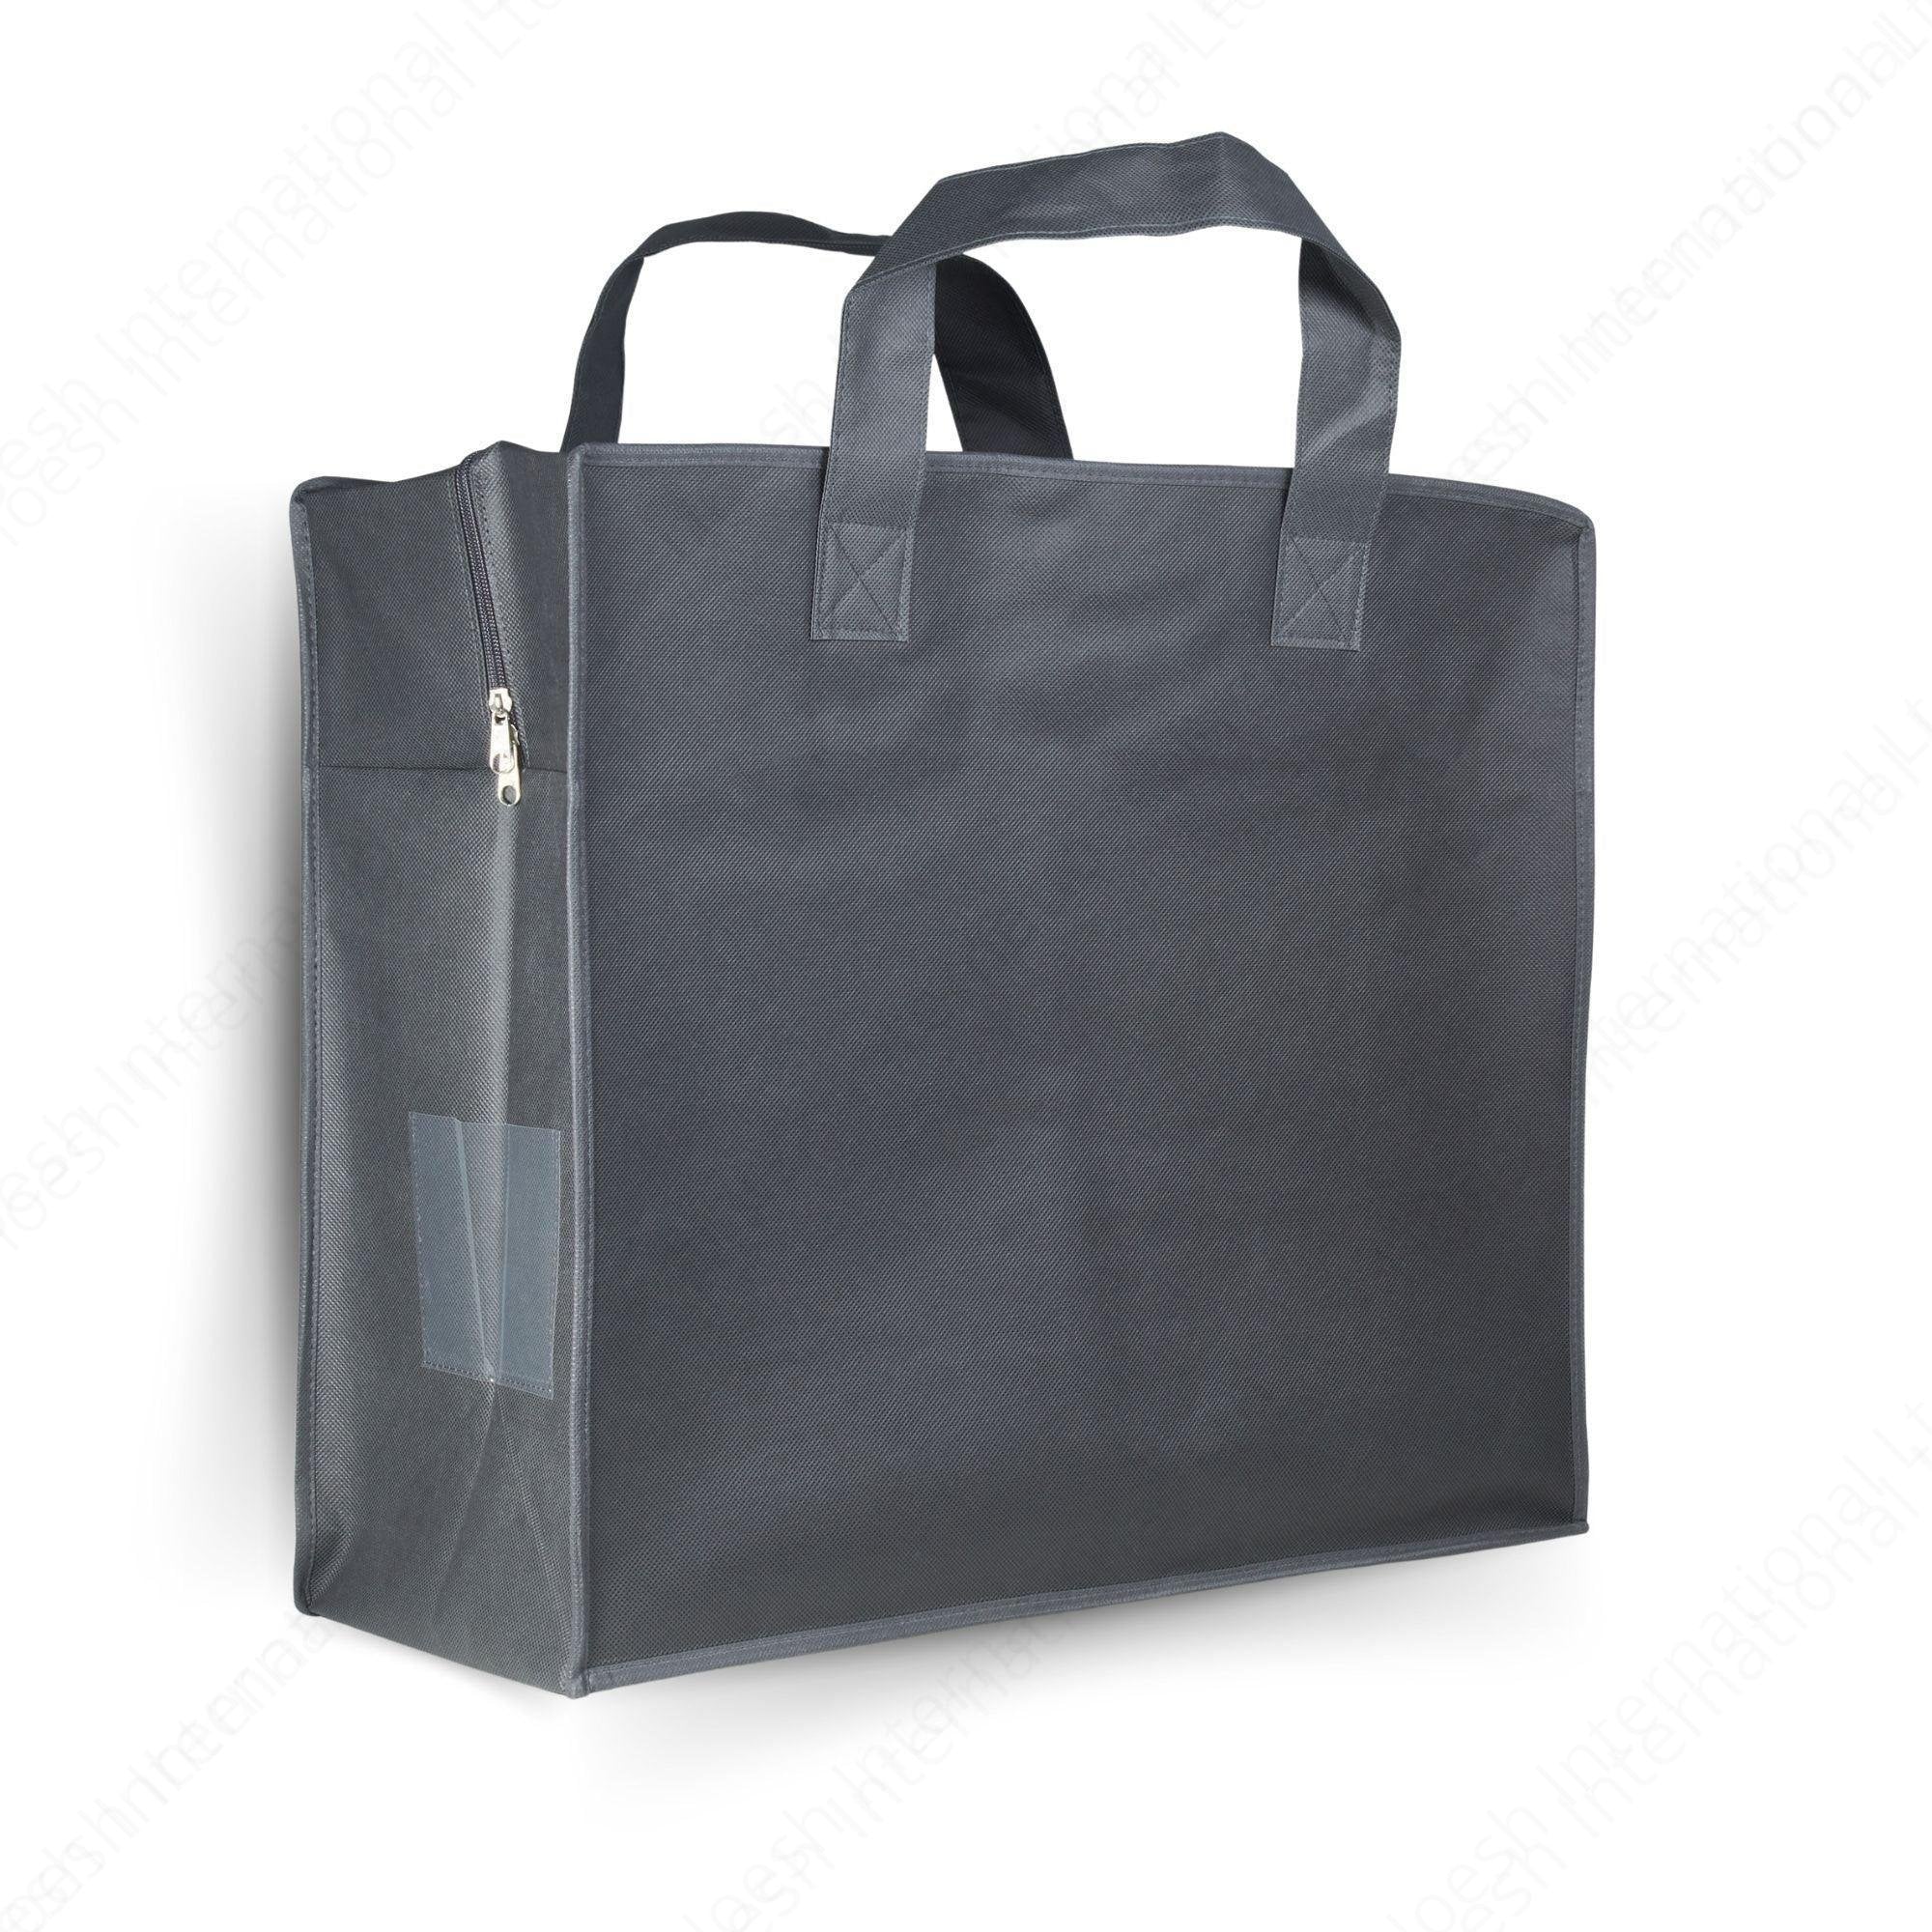 Drop & Go Laundry Bags - Hoesh International Ltd